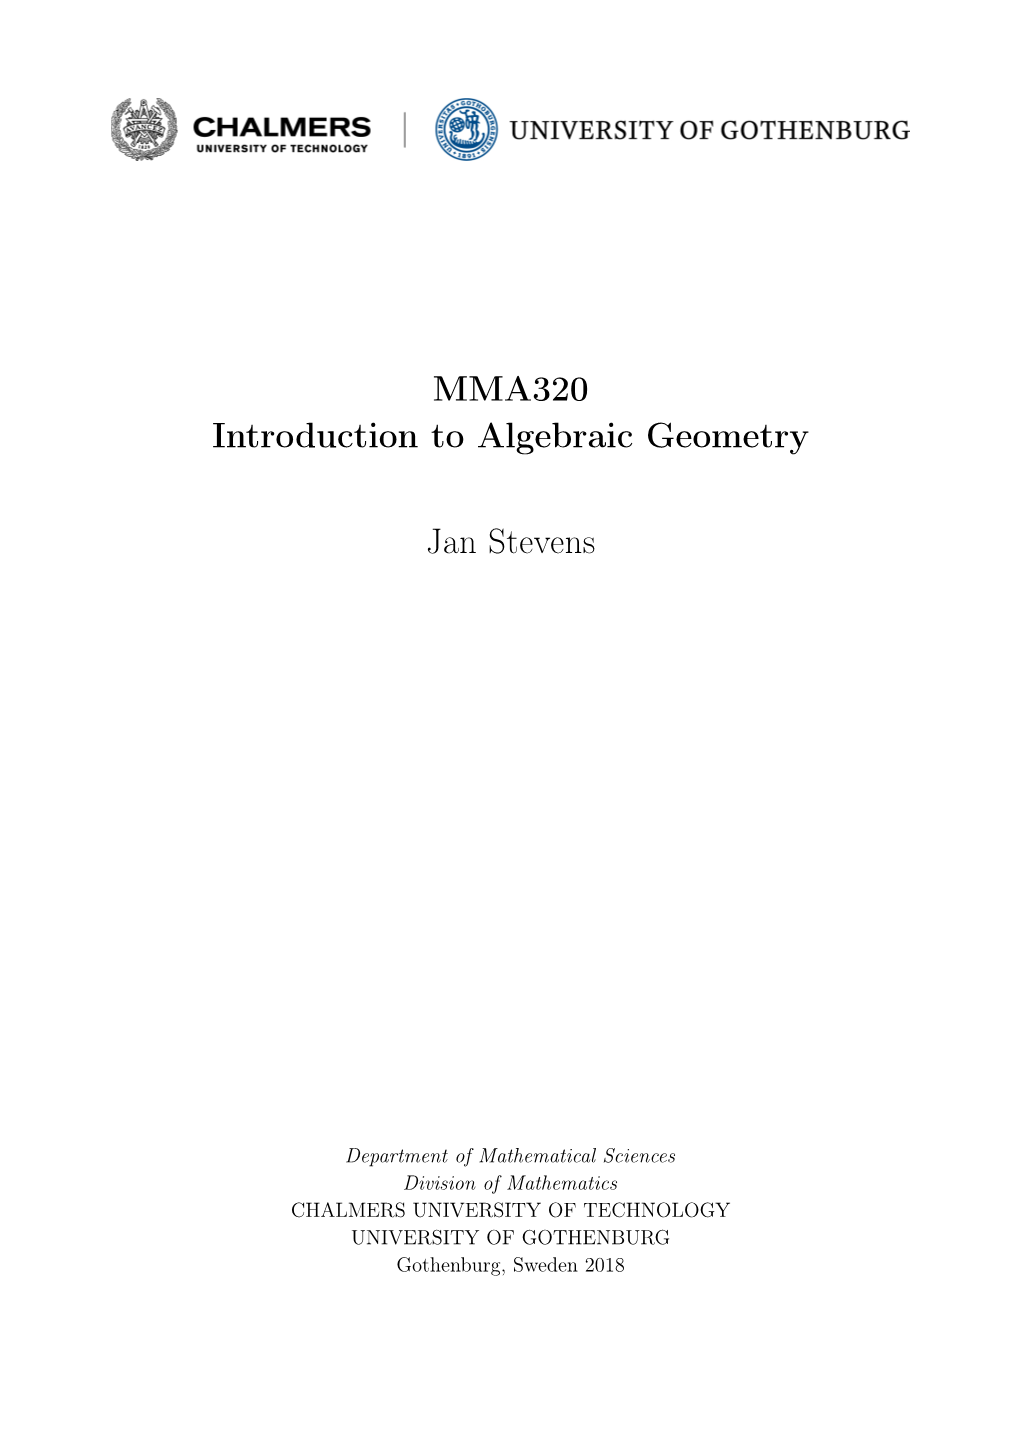 MMA320 Introduction to Algebraic Geometry Jan Stevens